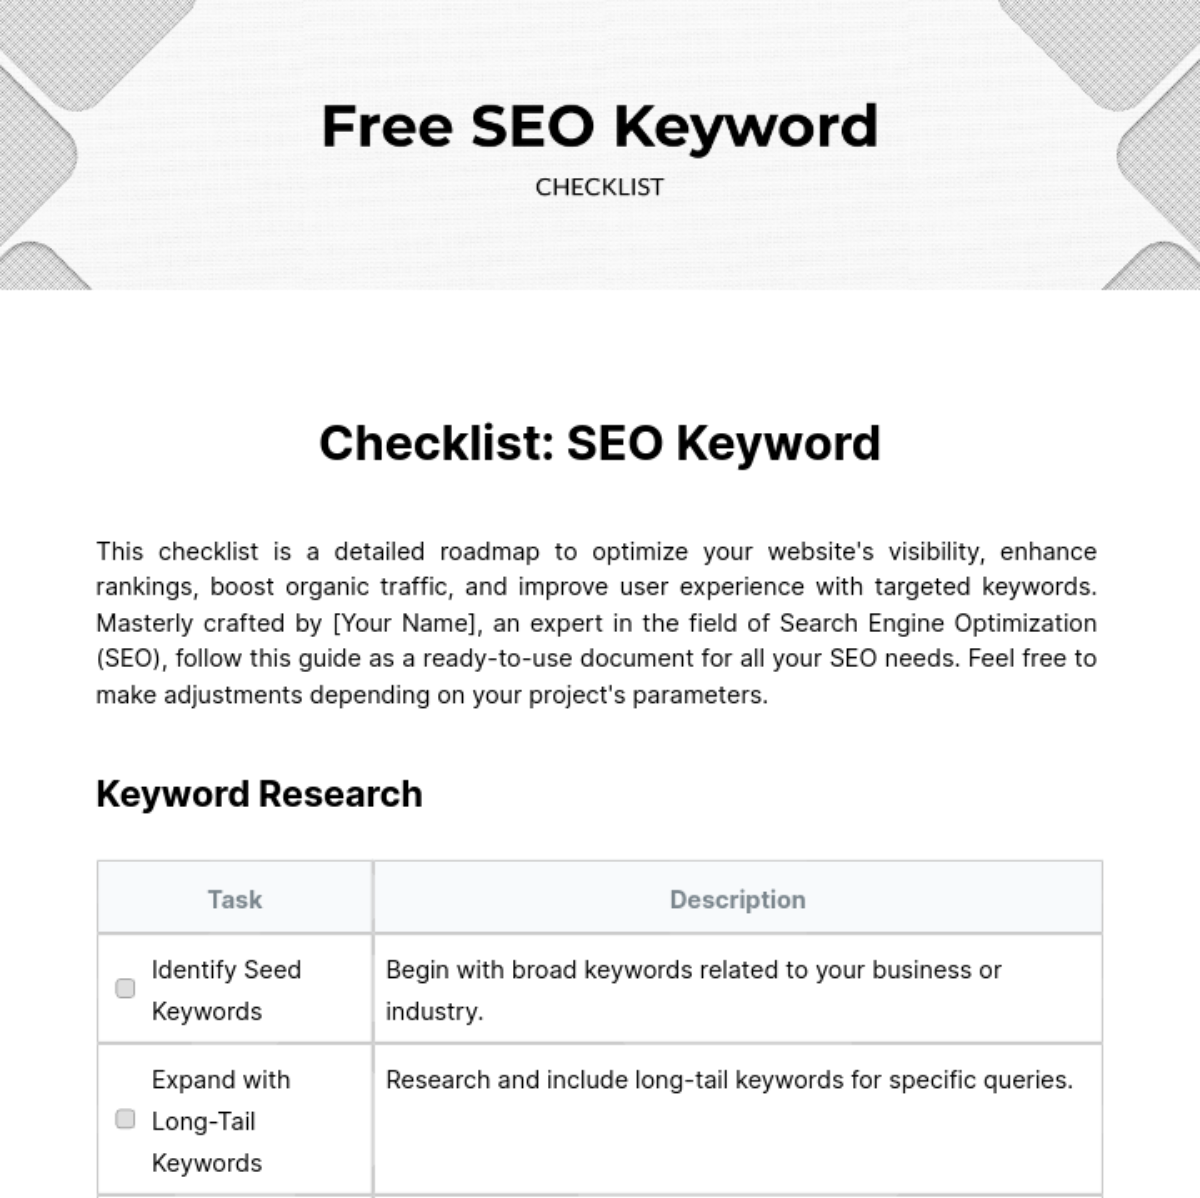 SEO Keyword Checklist Template